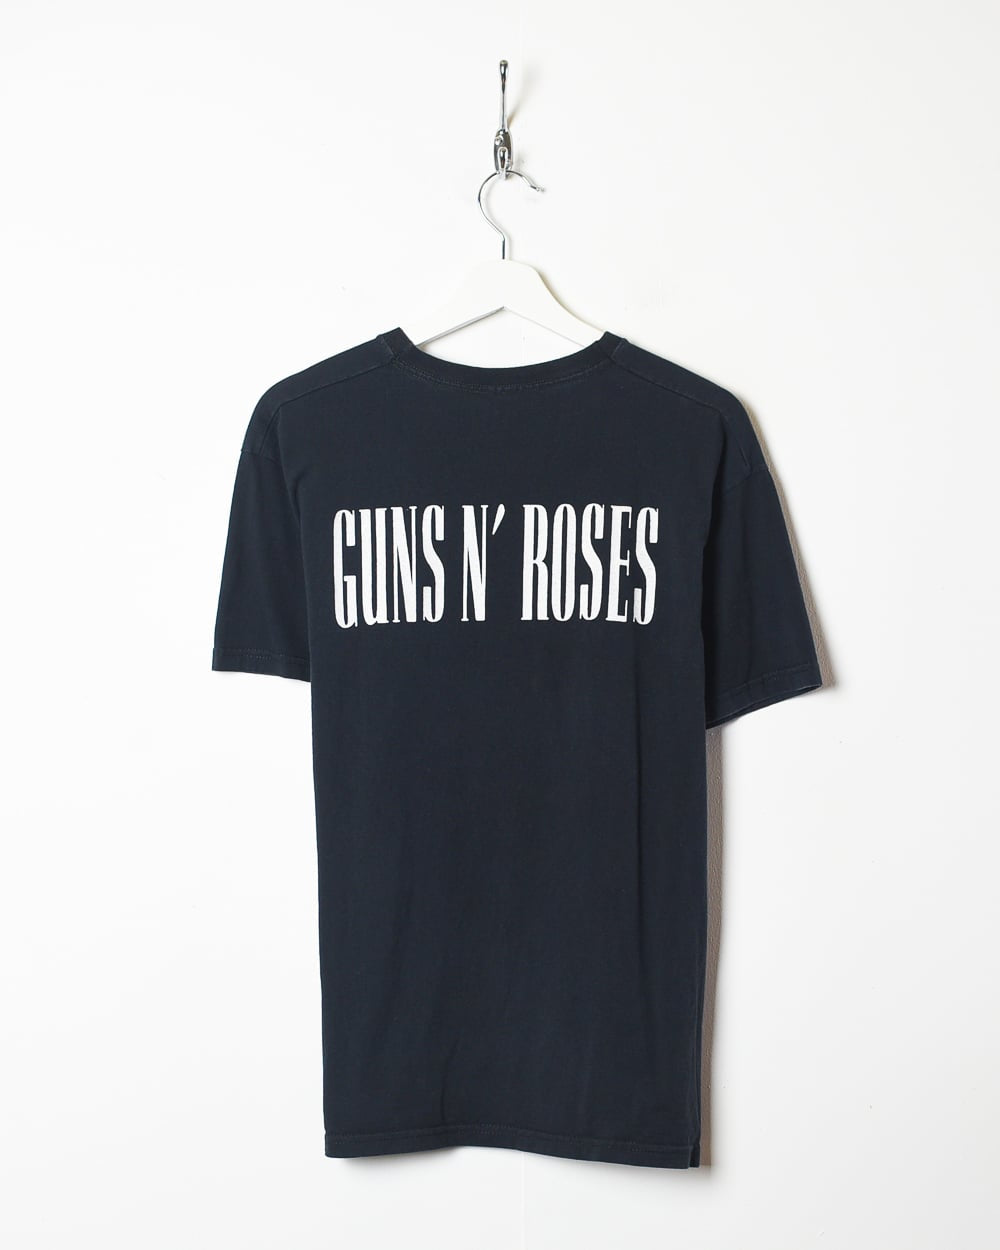 Black Guns N' Roses Graphic T-Shirt - Small